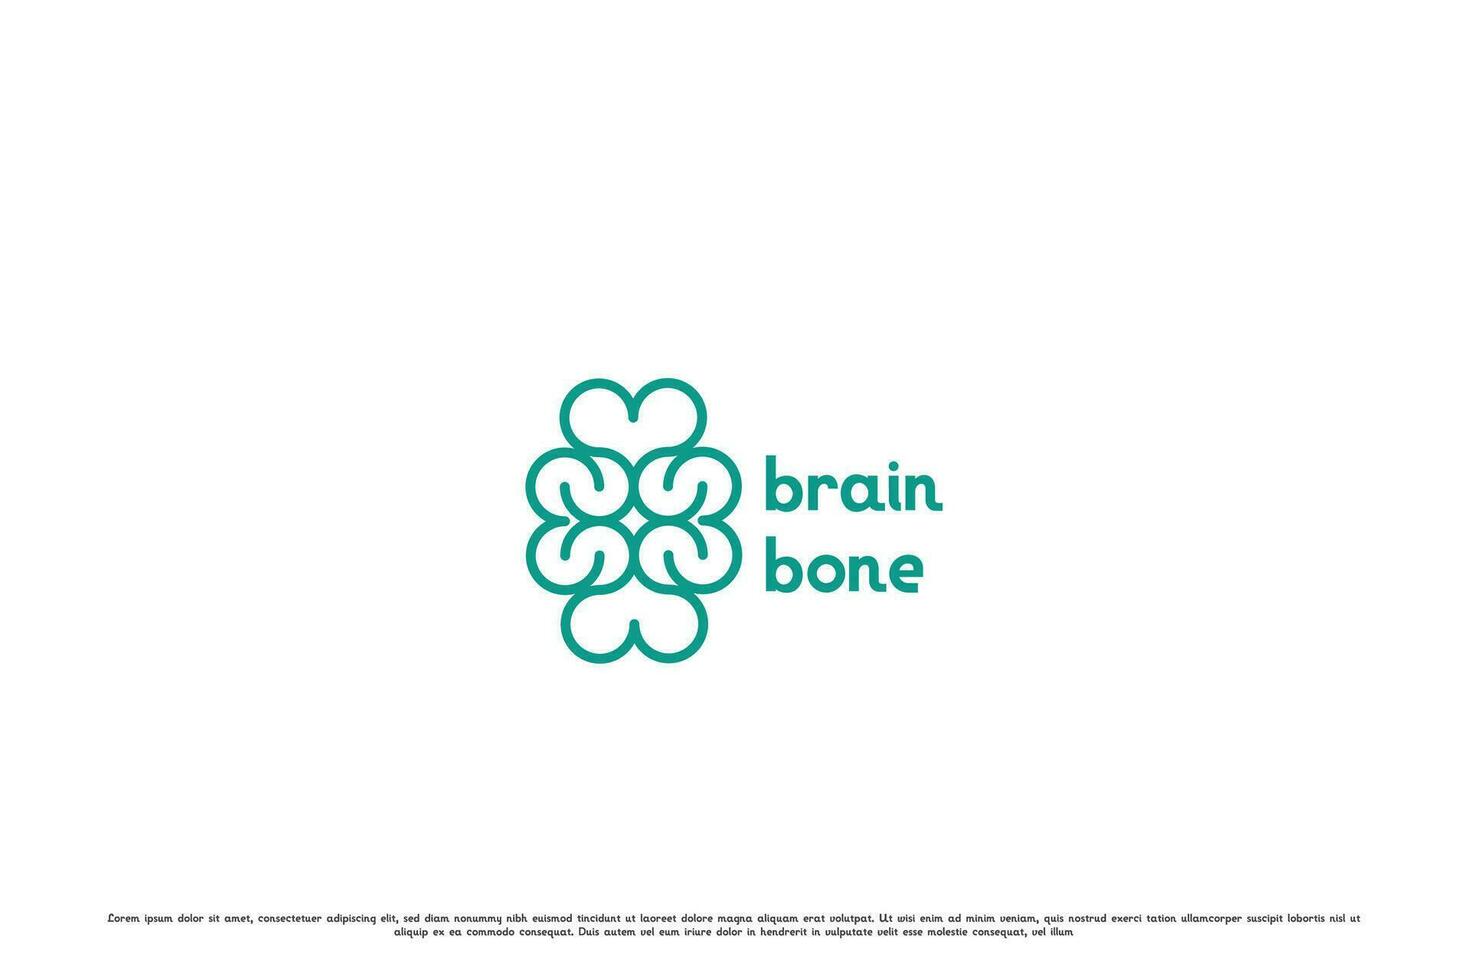 Brain bone logo design illustration. Modern simple creative line silhouettes bones brain spine ligaments knee joints muscles human body. Hospital clinic orthopedic medical health icon symbol design. vector